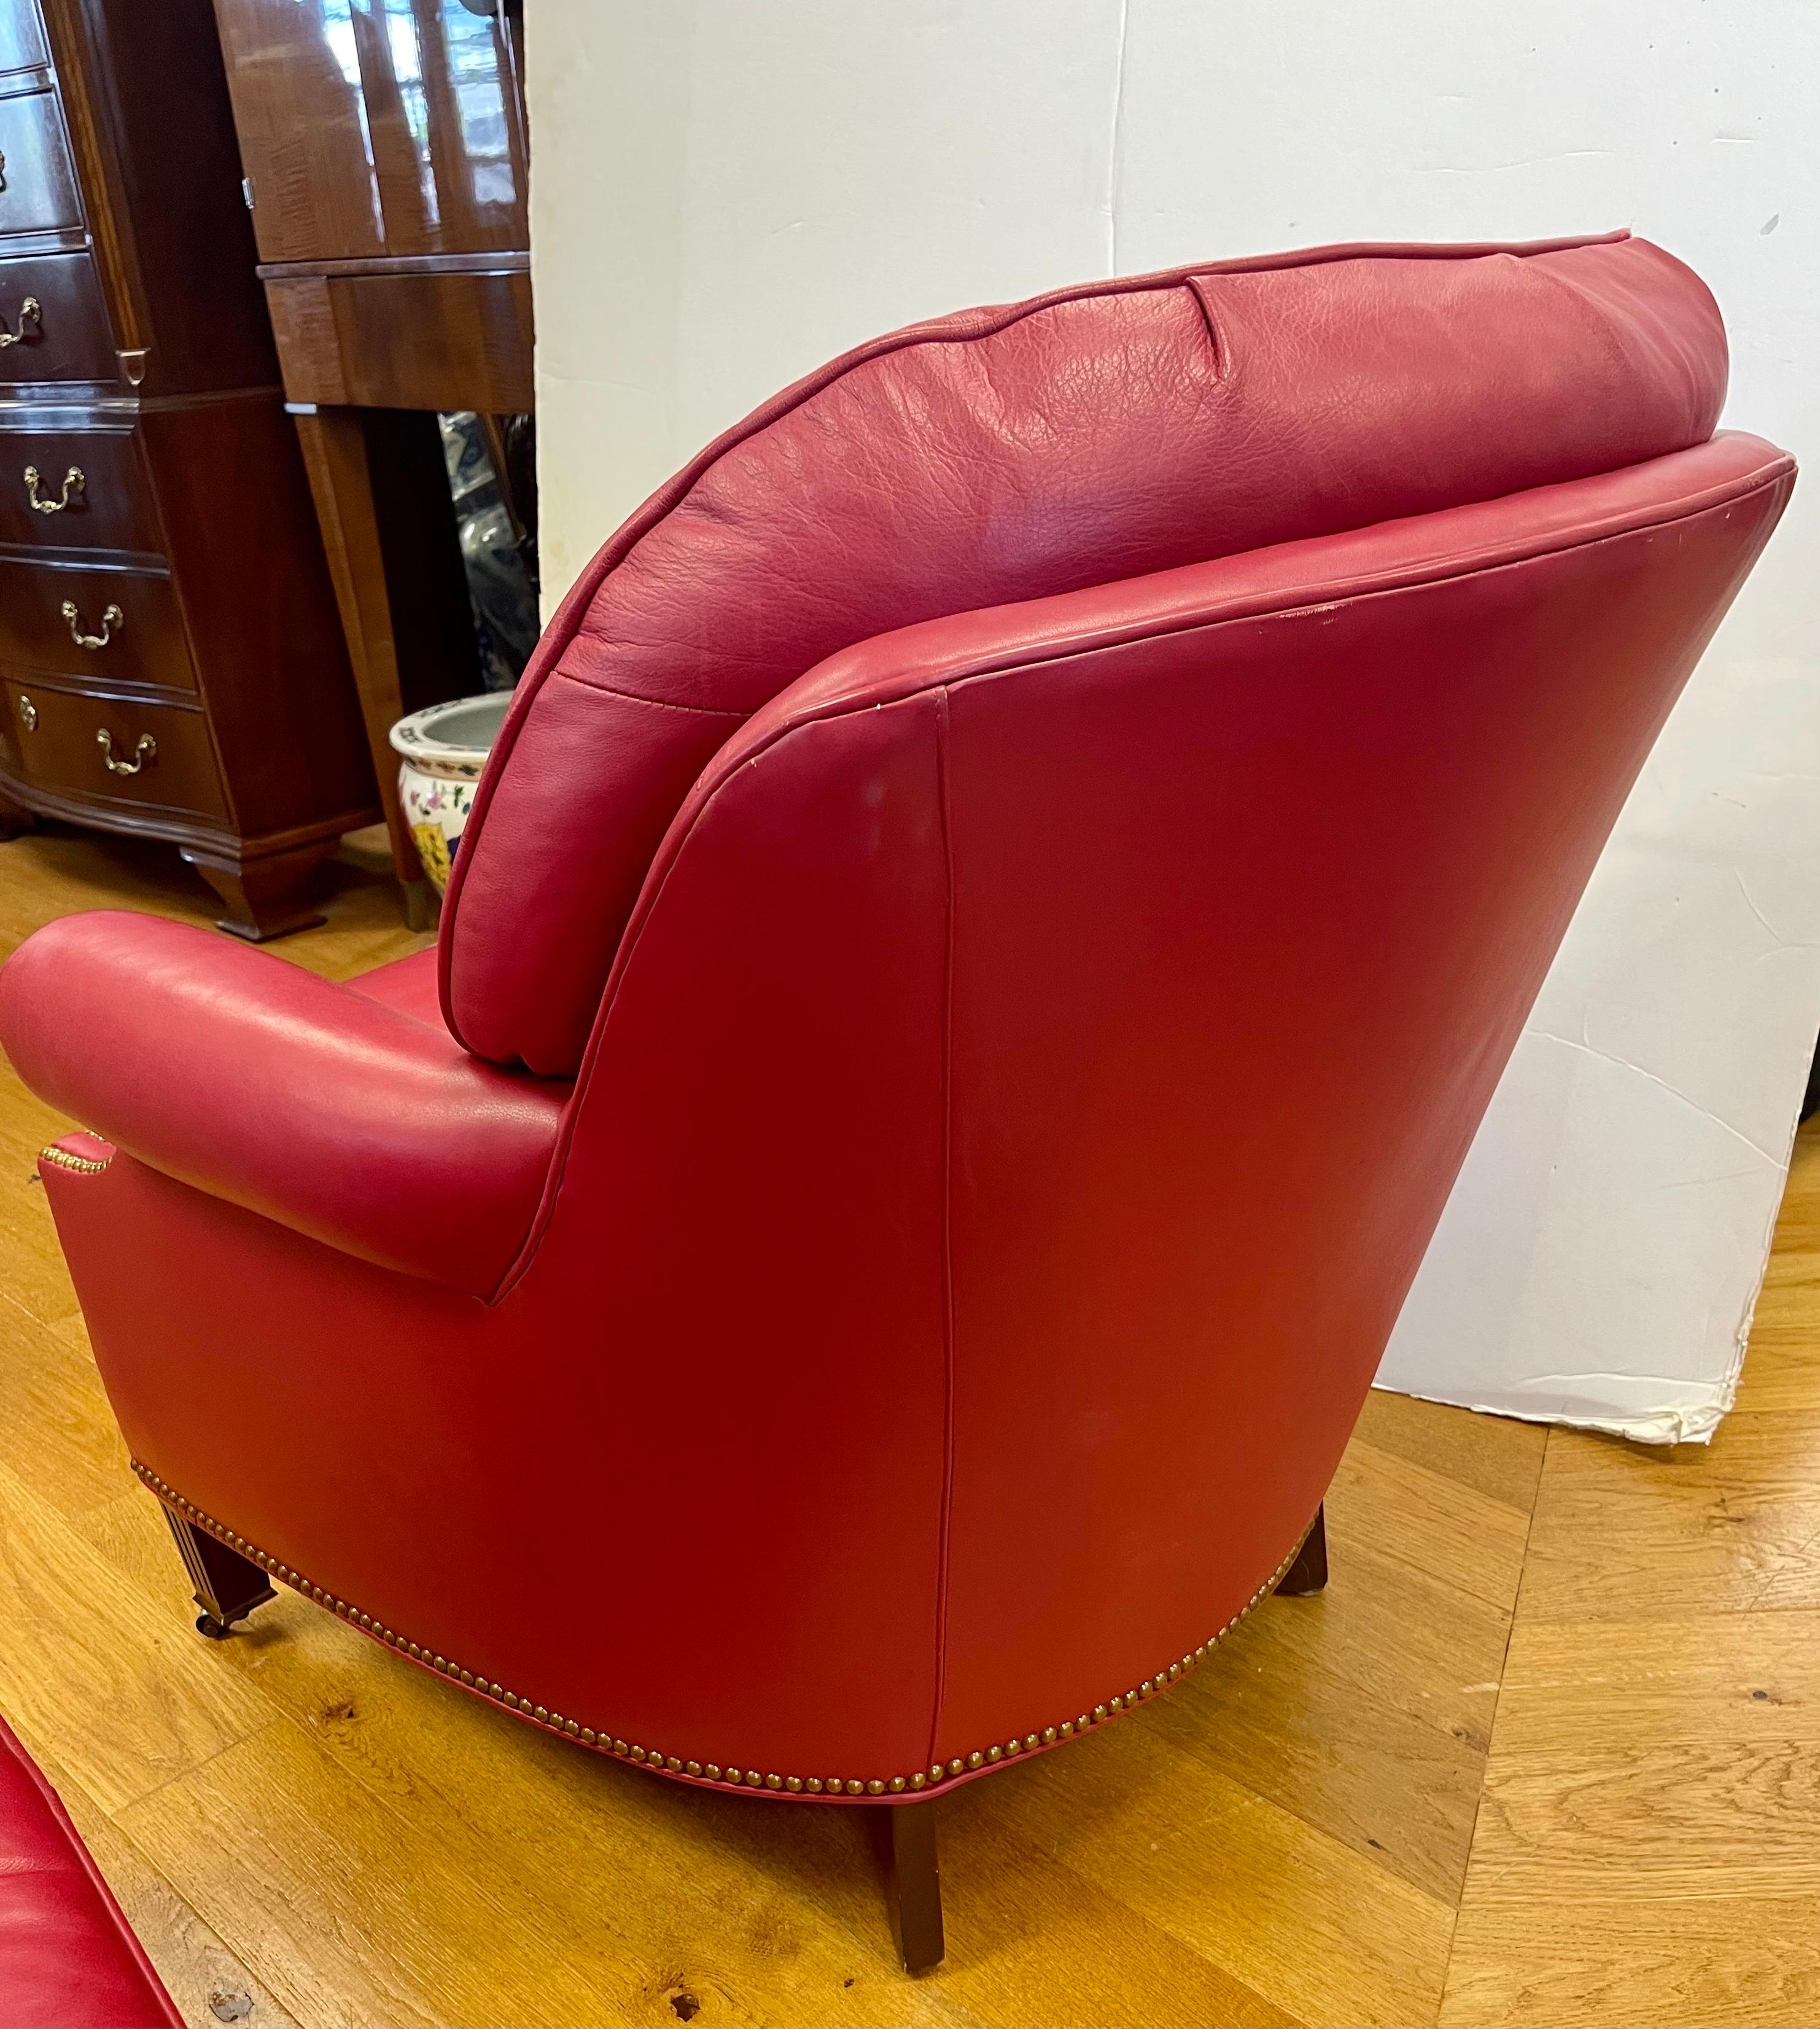 chair with ottoman underneath